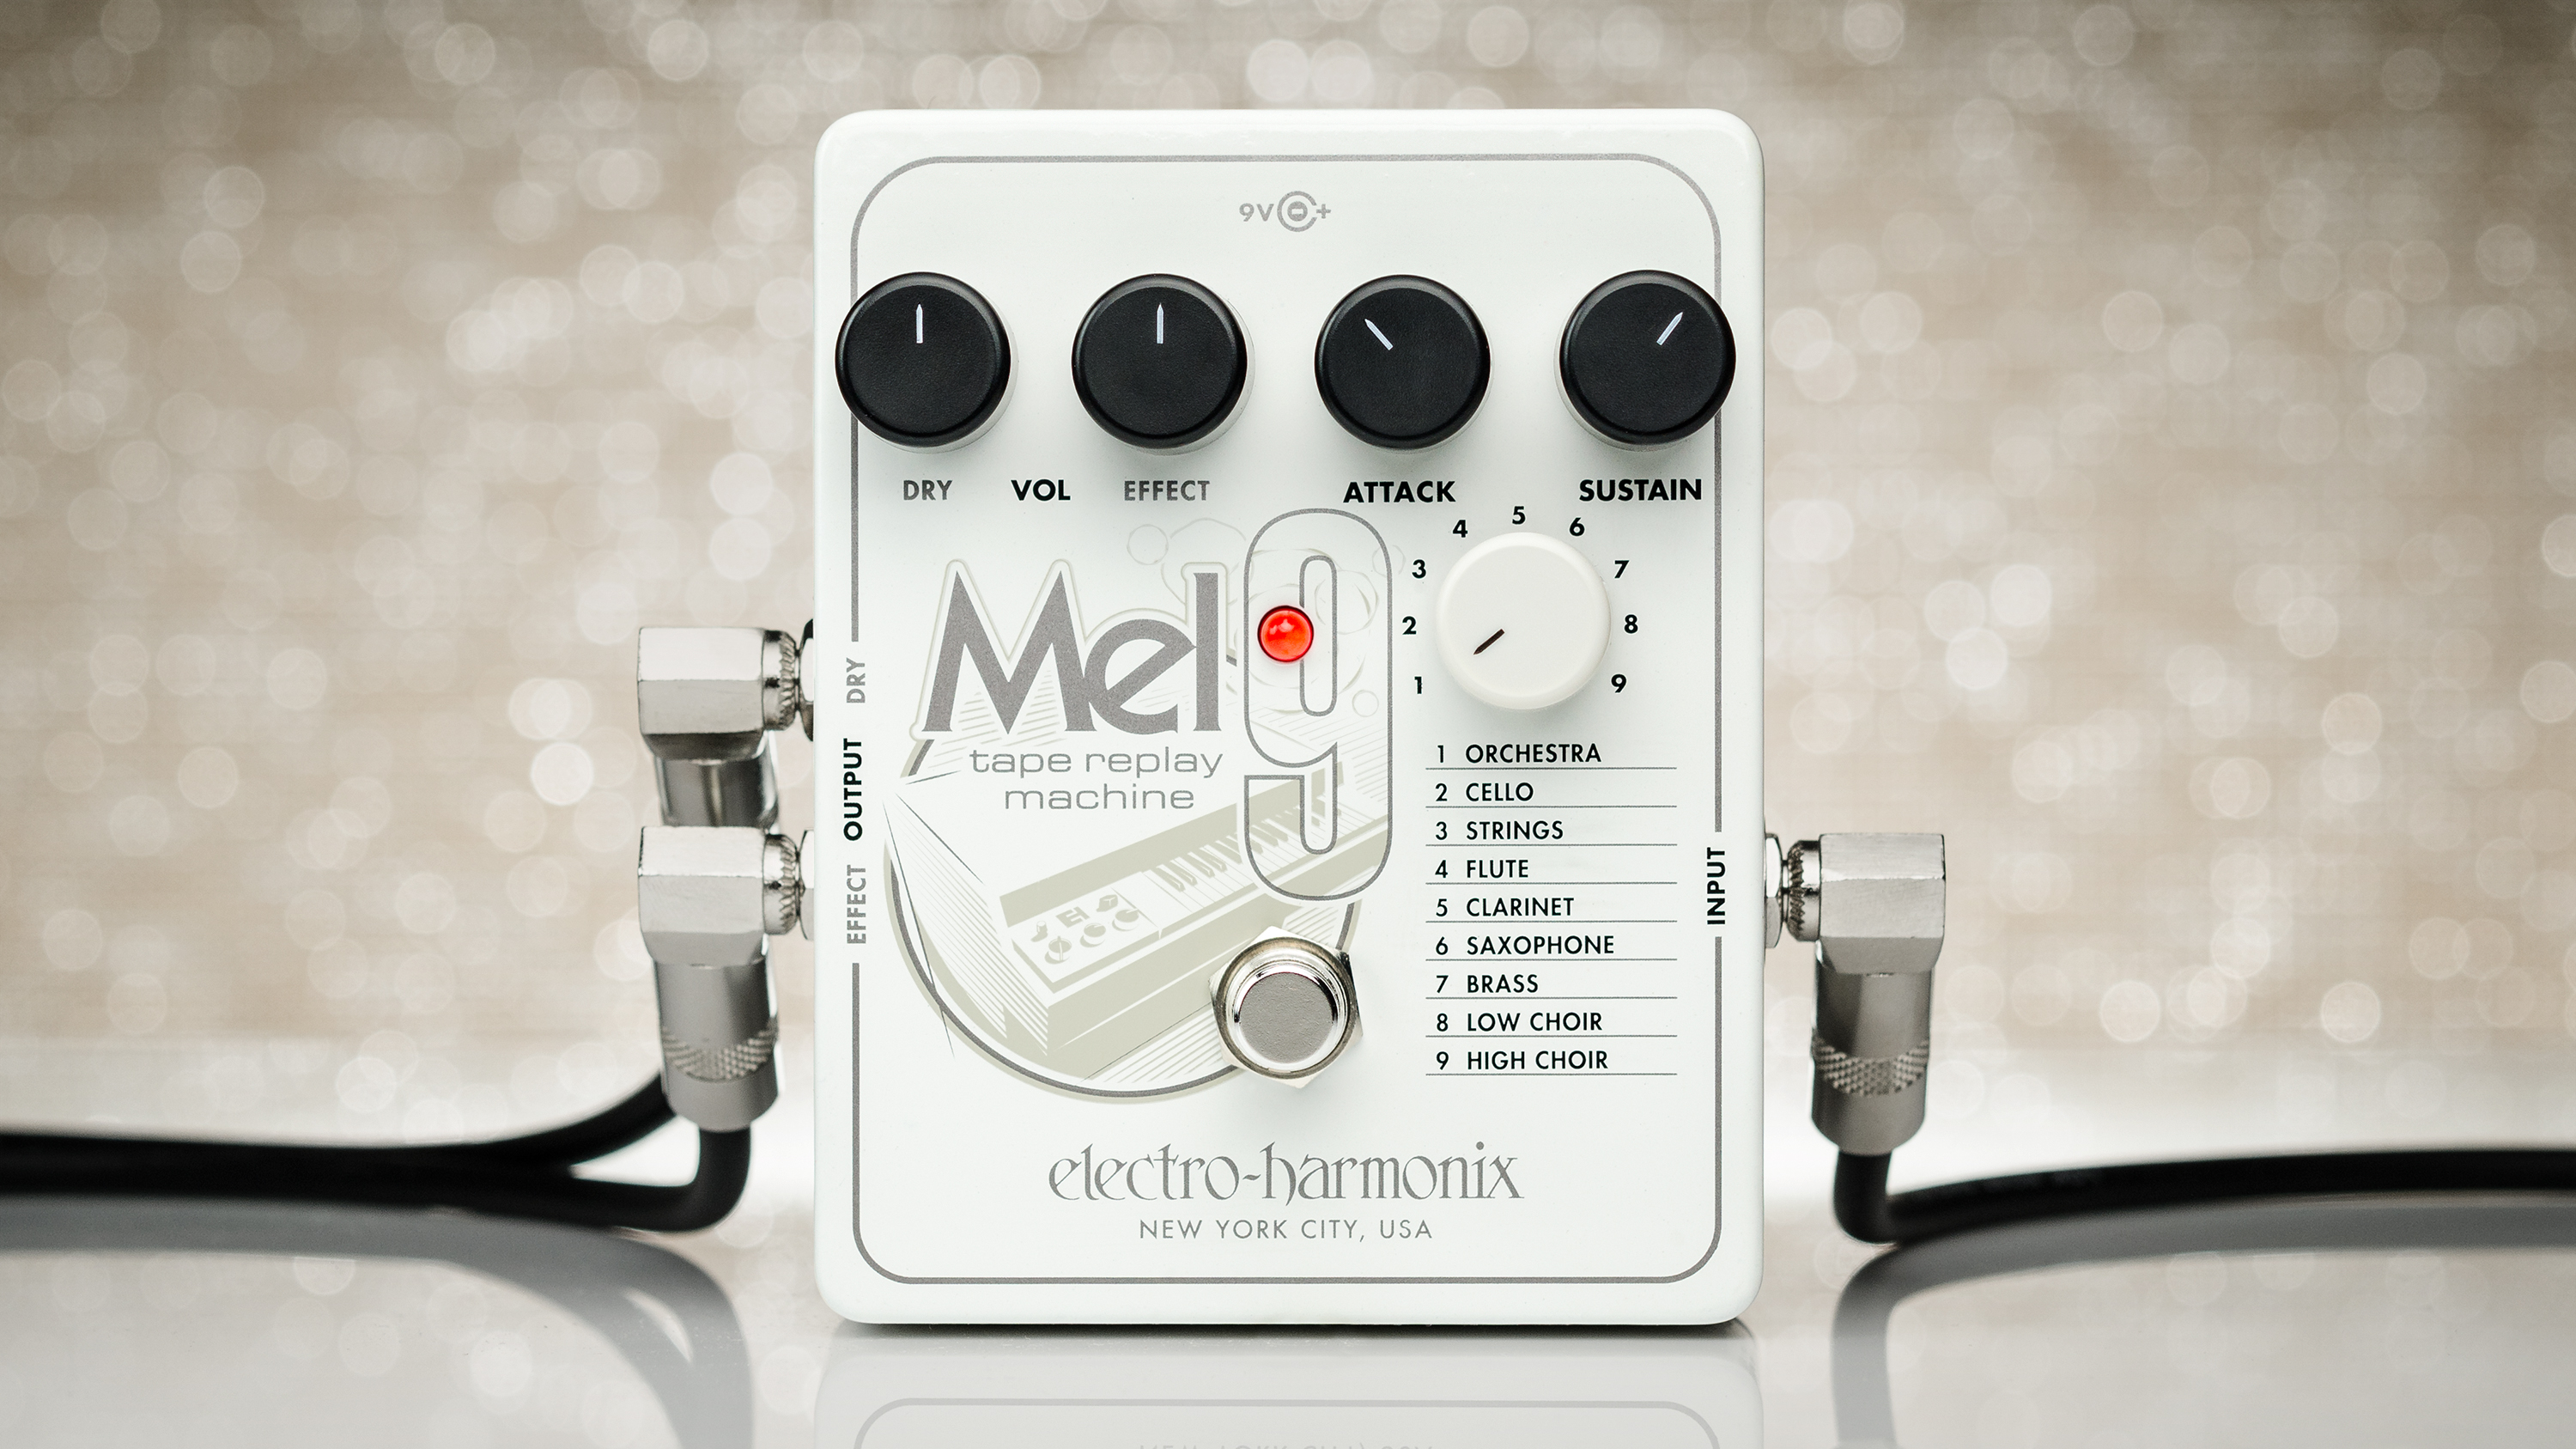 MEL9 | electro-harmonix -国内公式サイト-